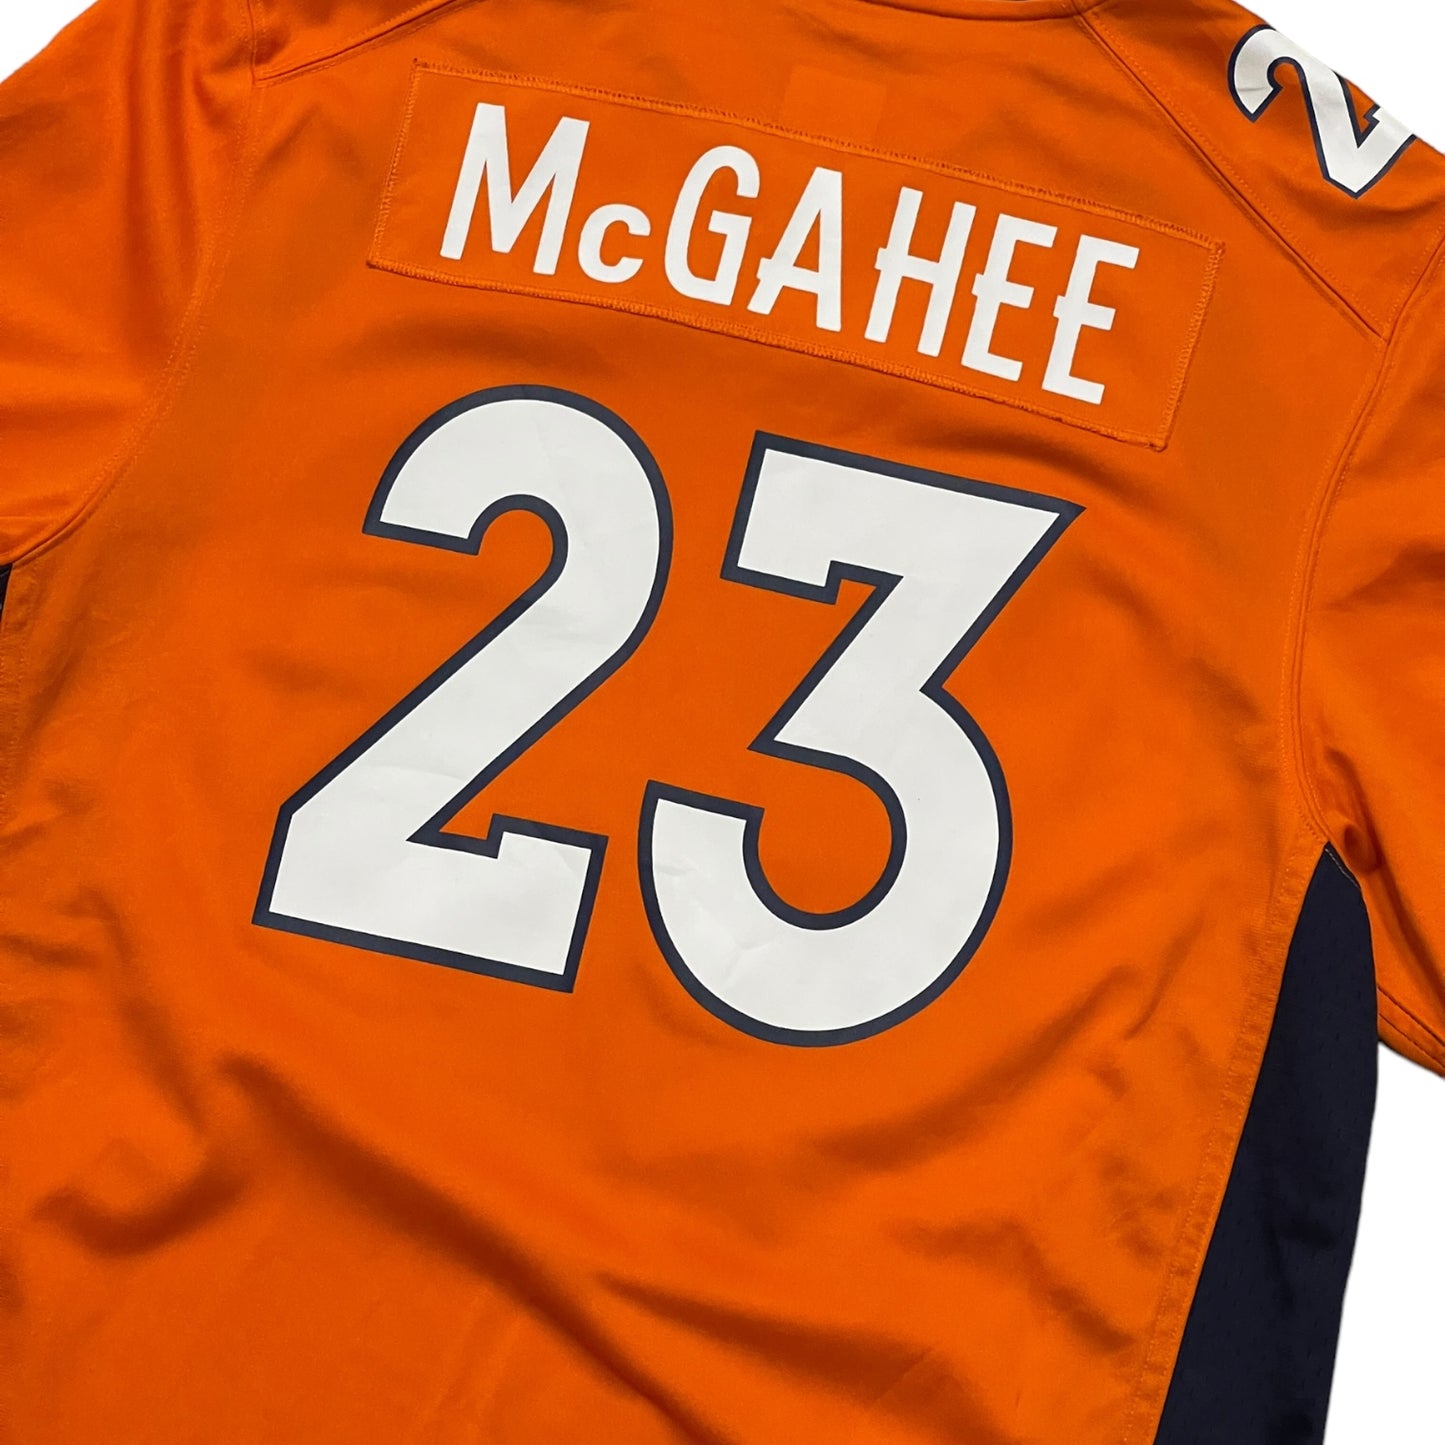 Nike Broncos "McGahee" 23 NFL Jersey